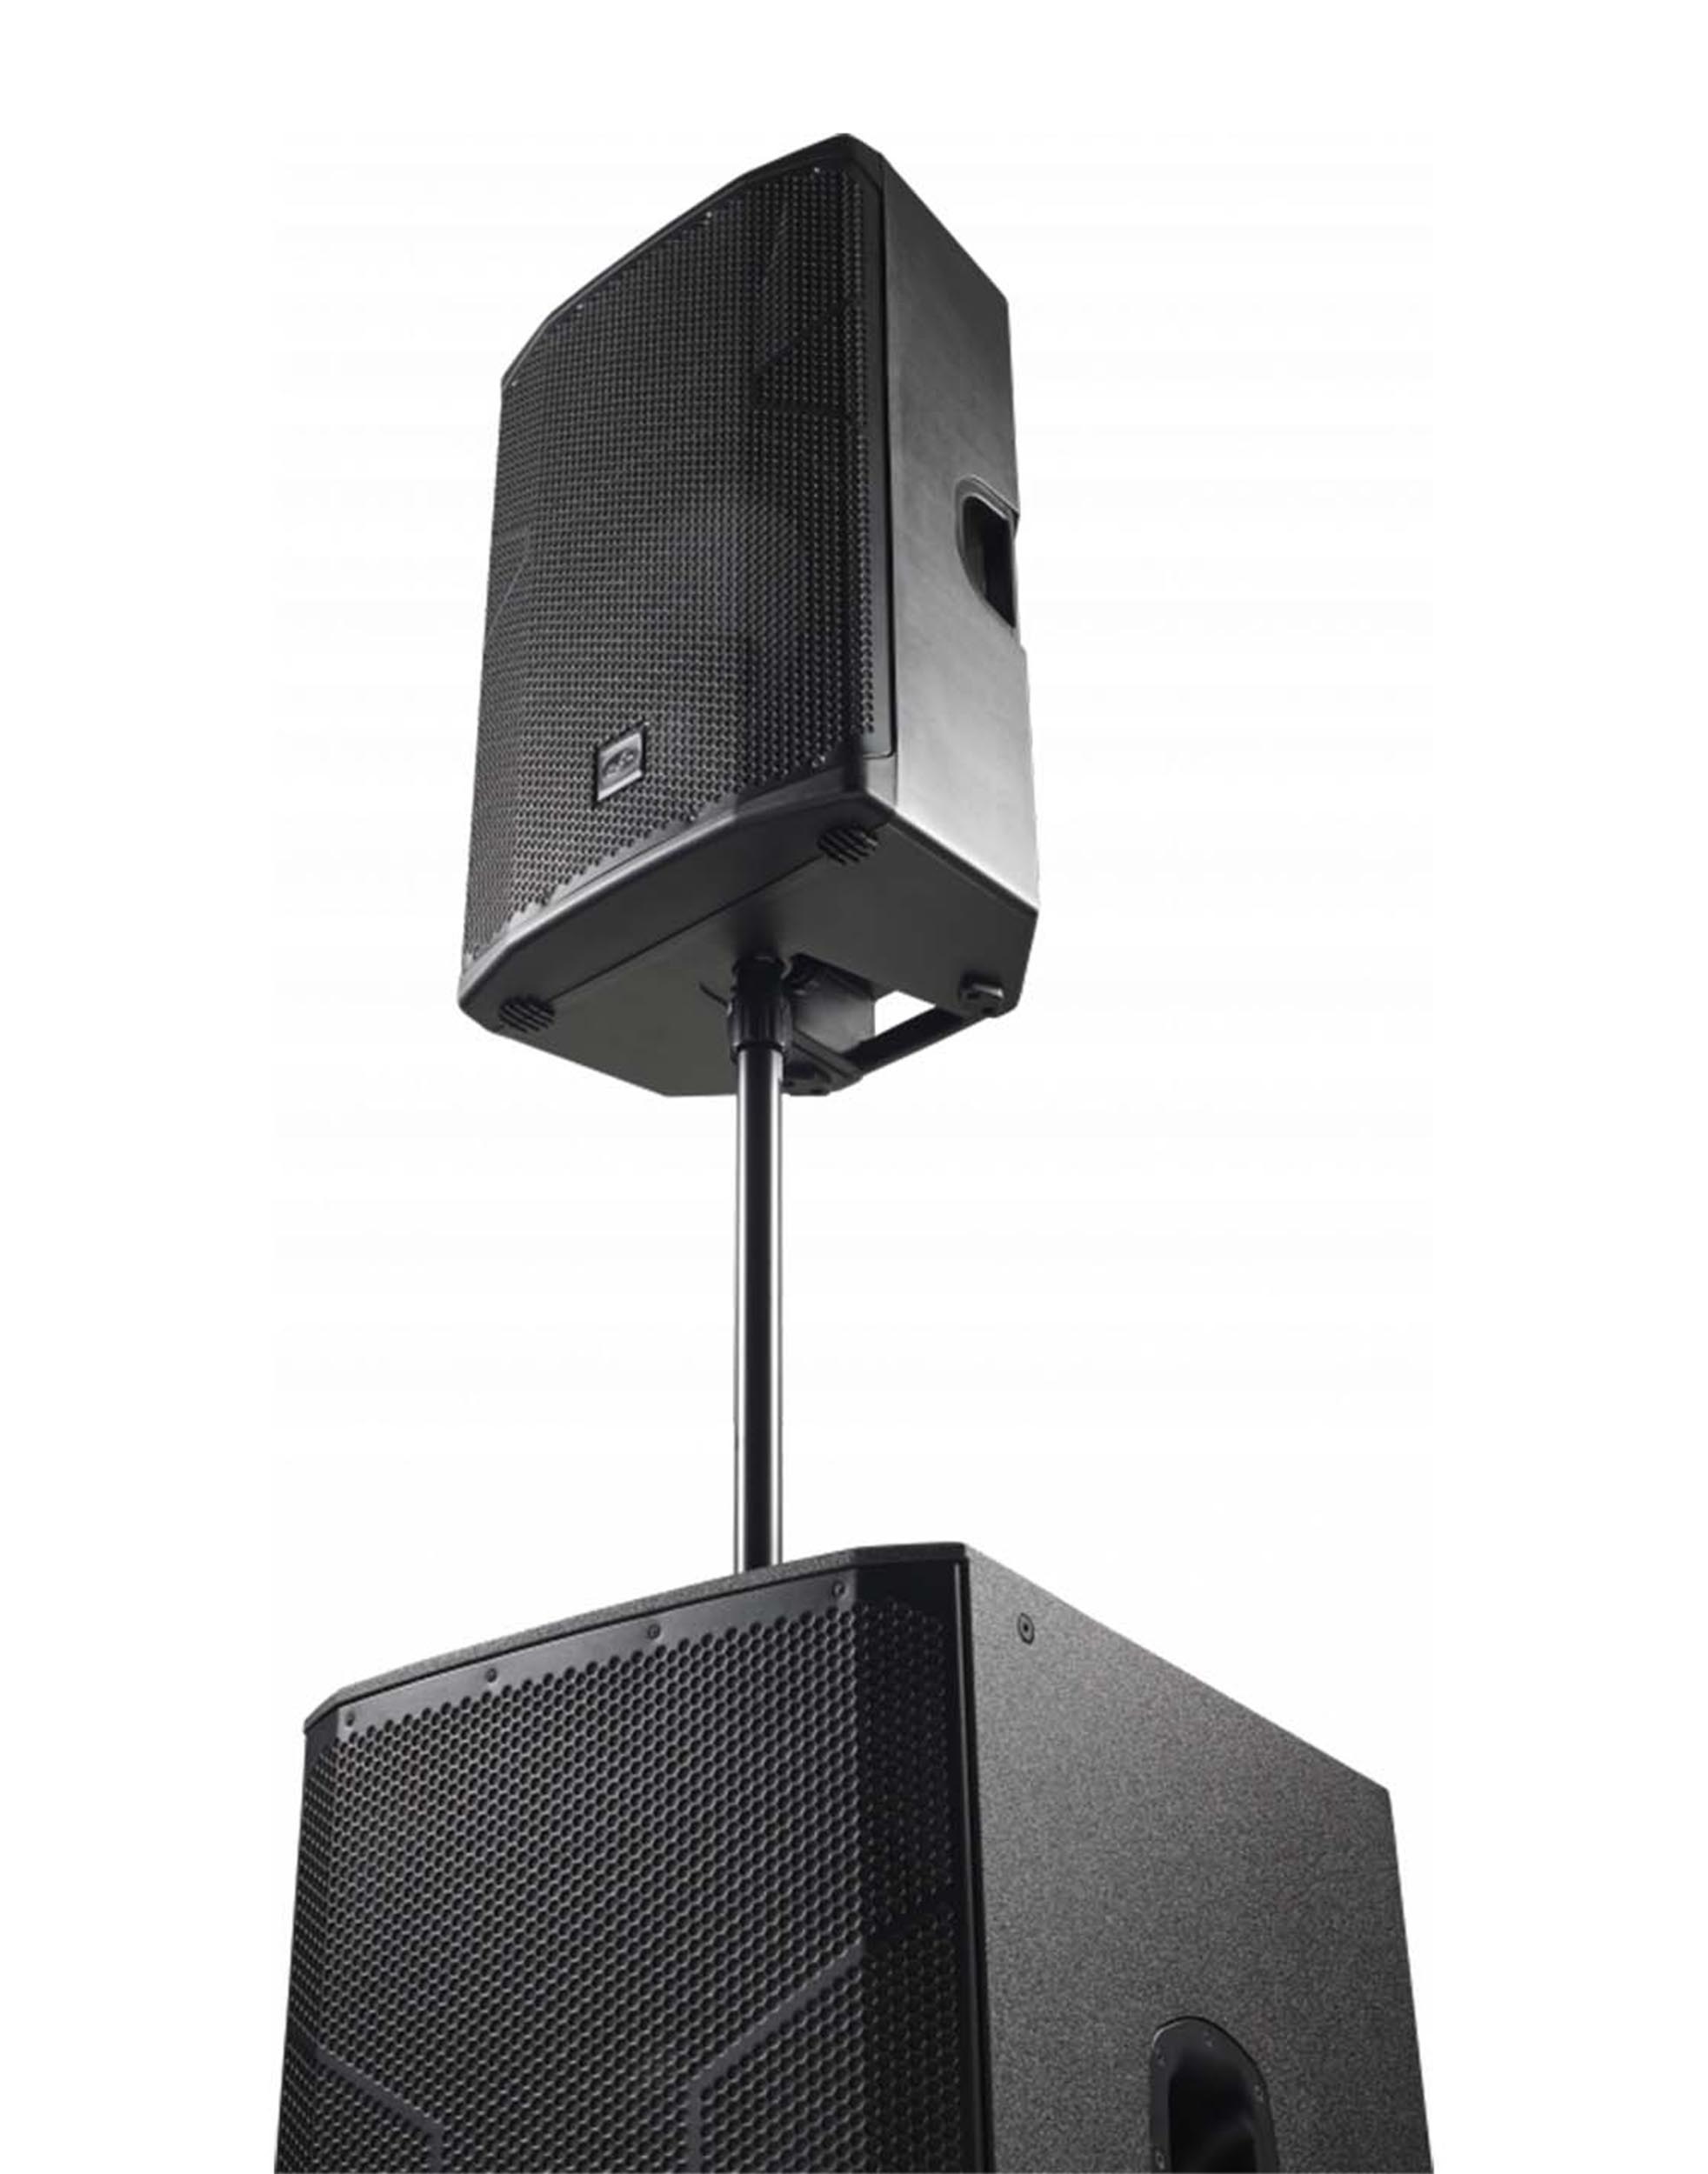 DAS Audio Altea 415A Powered Portable PA Speaker System - Black by DAS Audio